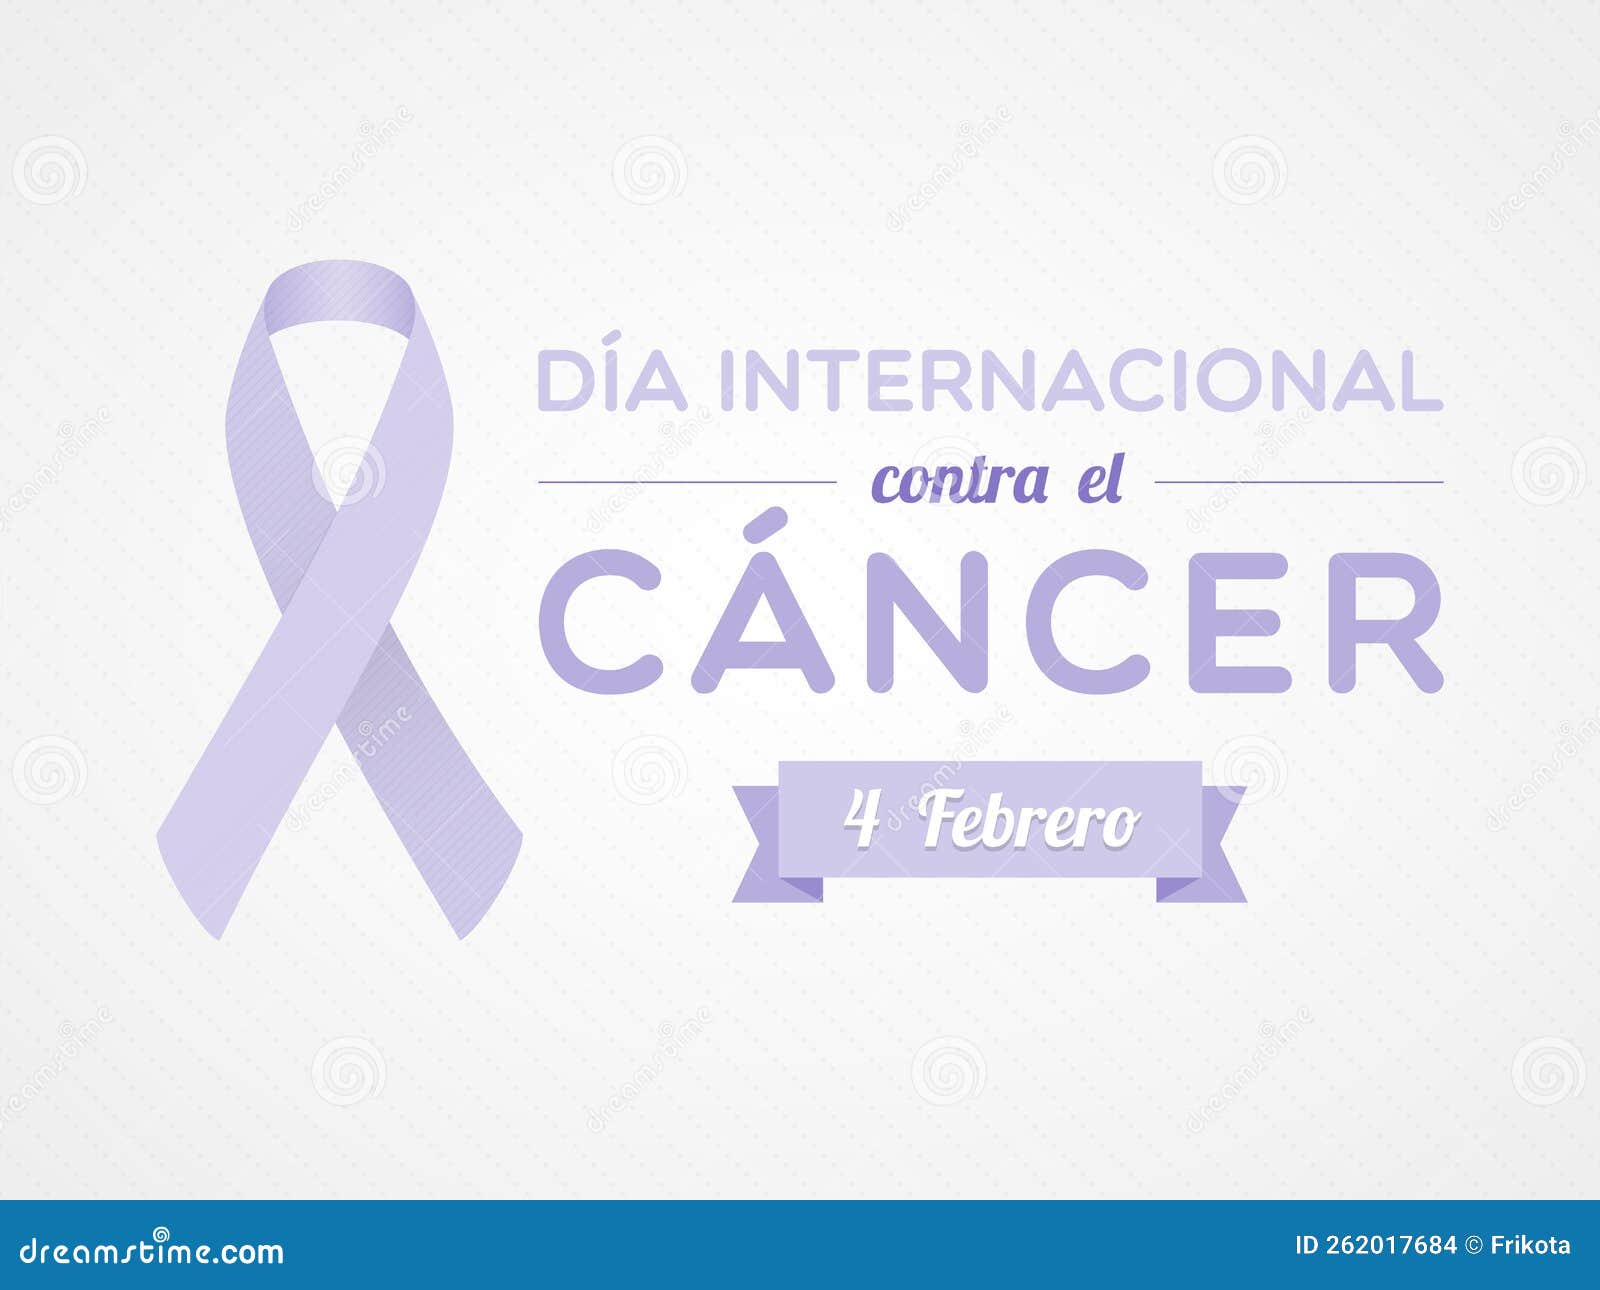 world cancer day in spanish. dia internacional contra el cancer. february 4.  , flat 